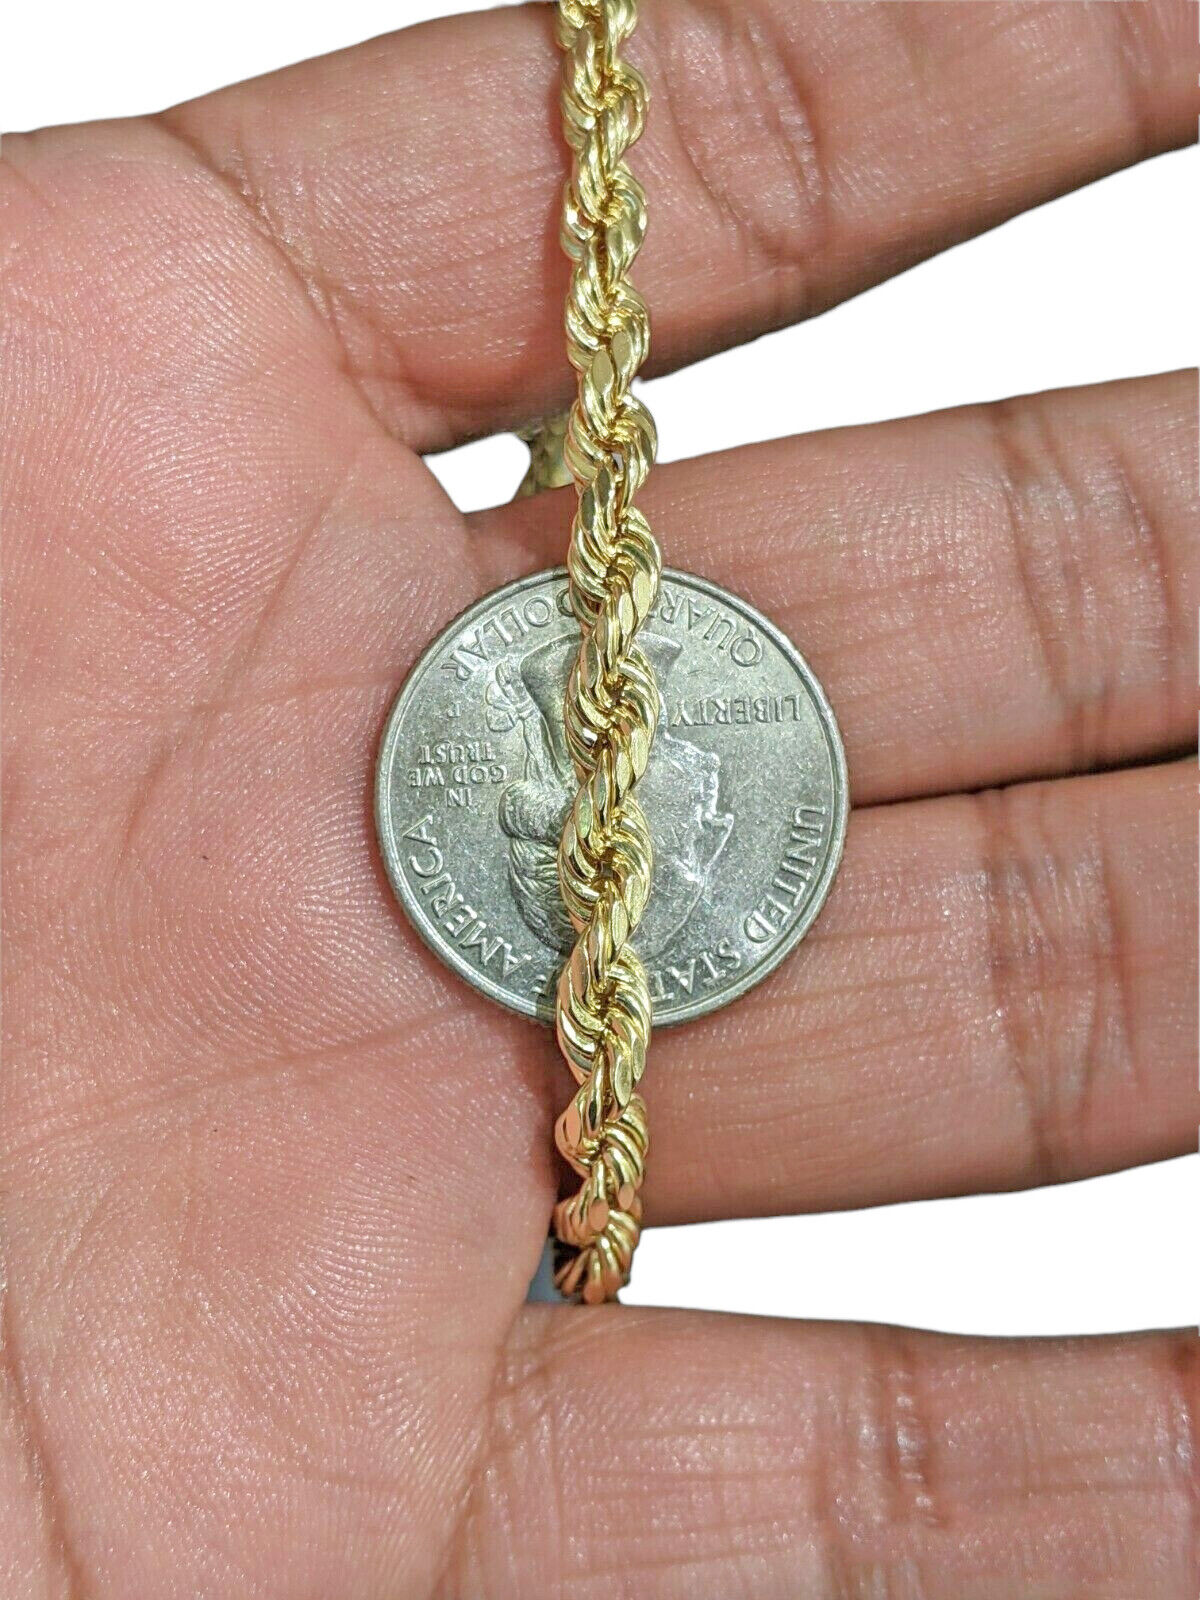 Real 14k Gold Rope chain 20 Inch 4mm Diamond Cuts 14kt Yellow Gold Men Women